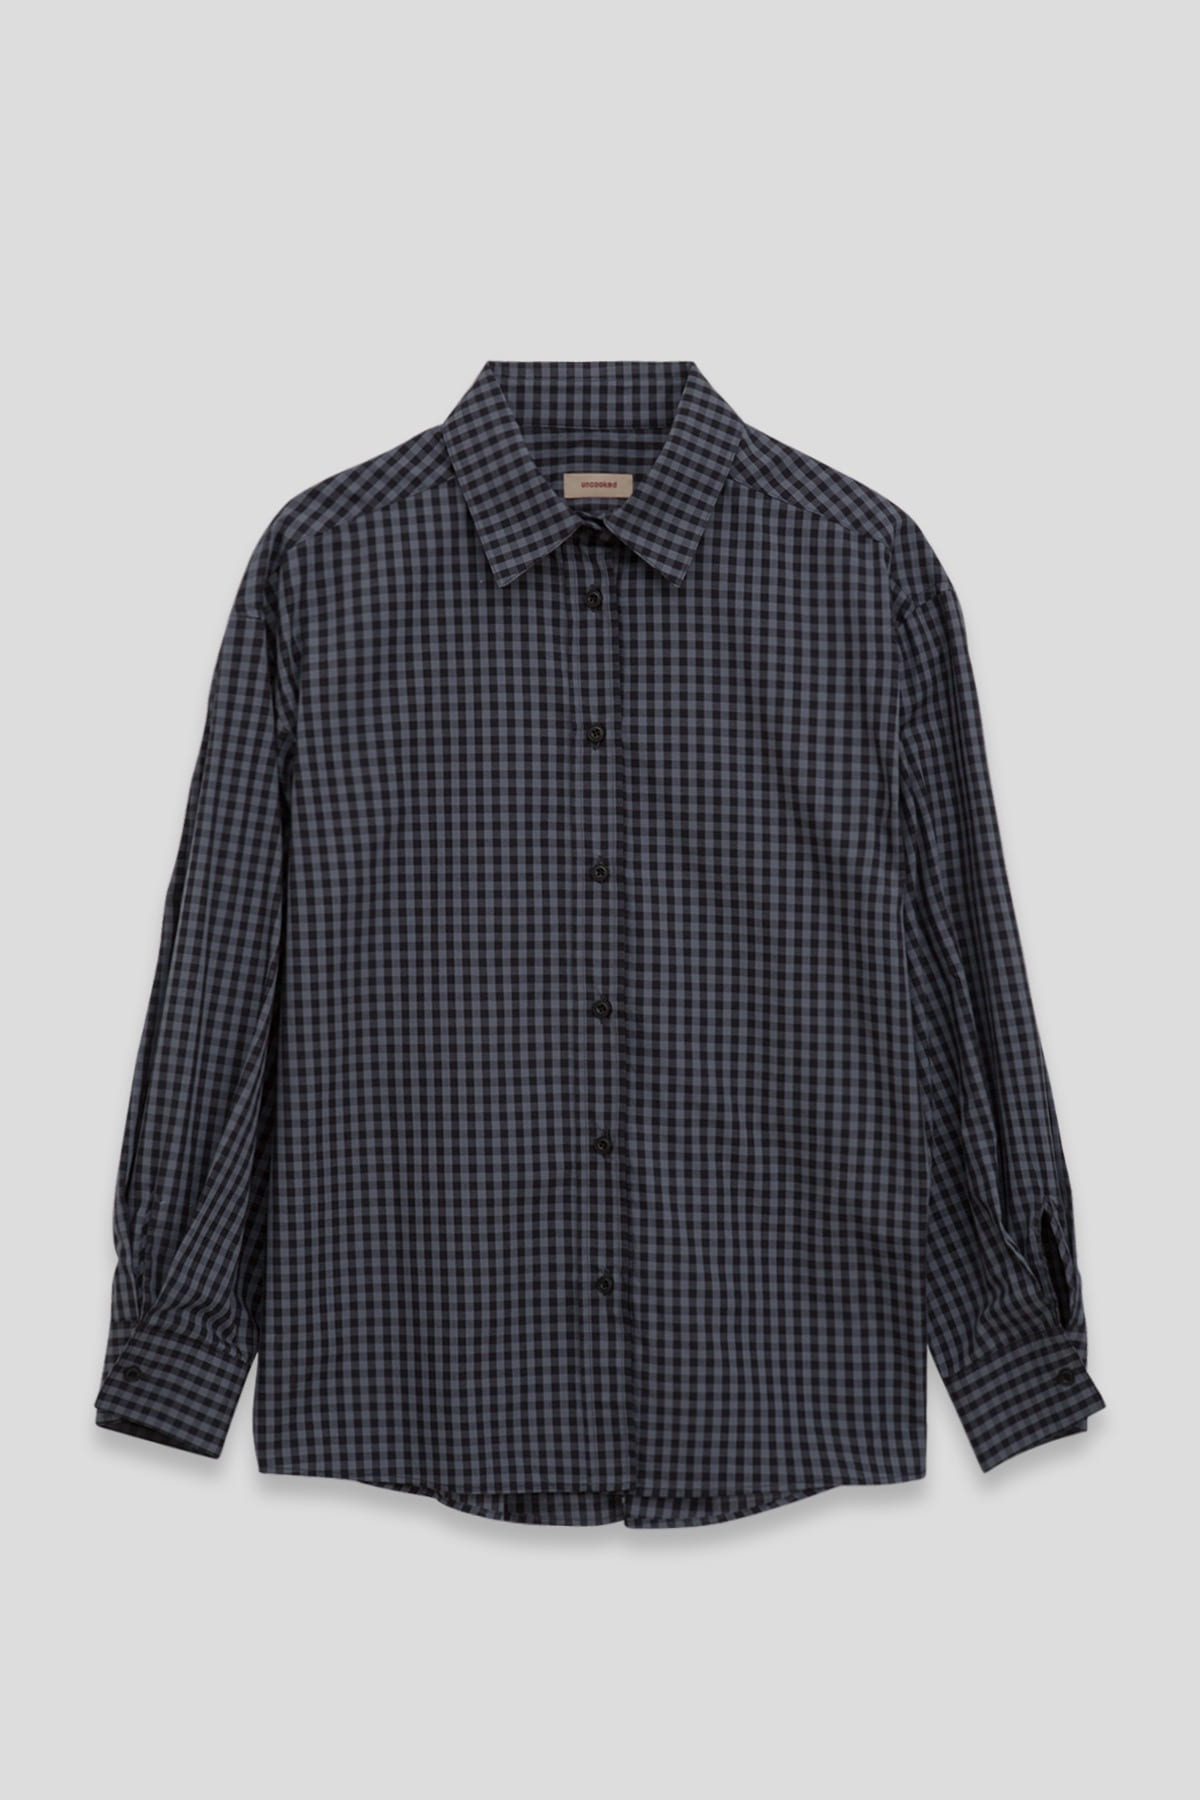 Cotton check basic shirt(grey black)